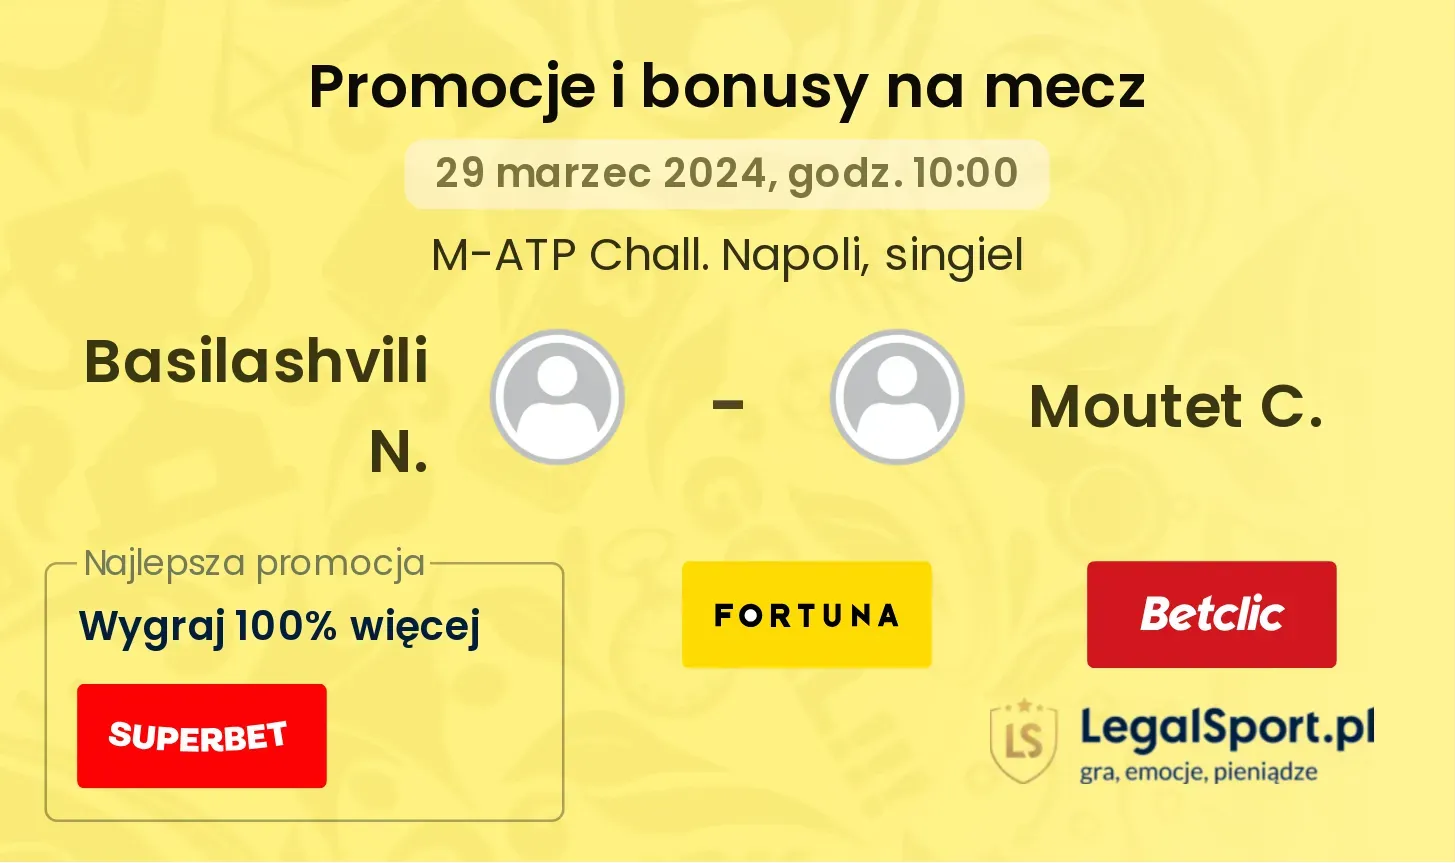 Basilashvili N. - Moutet C. promocje bonusy na mecz